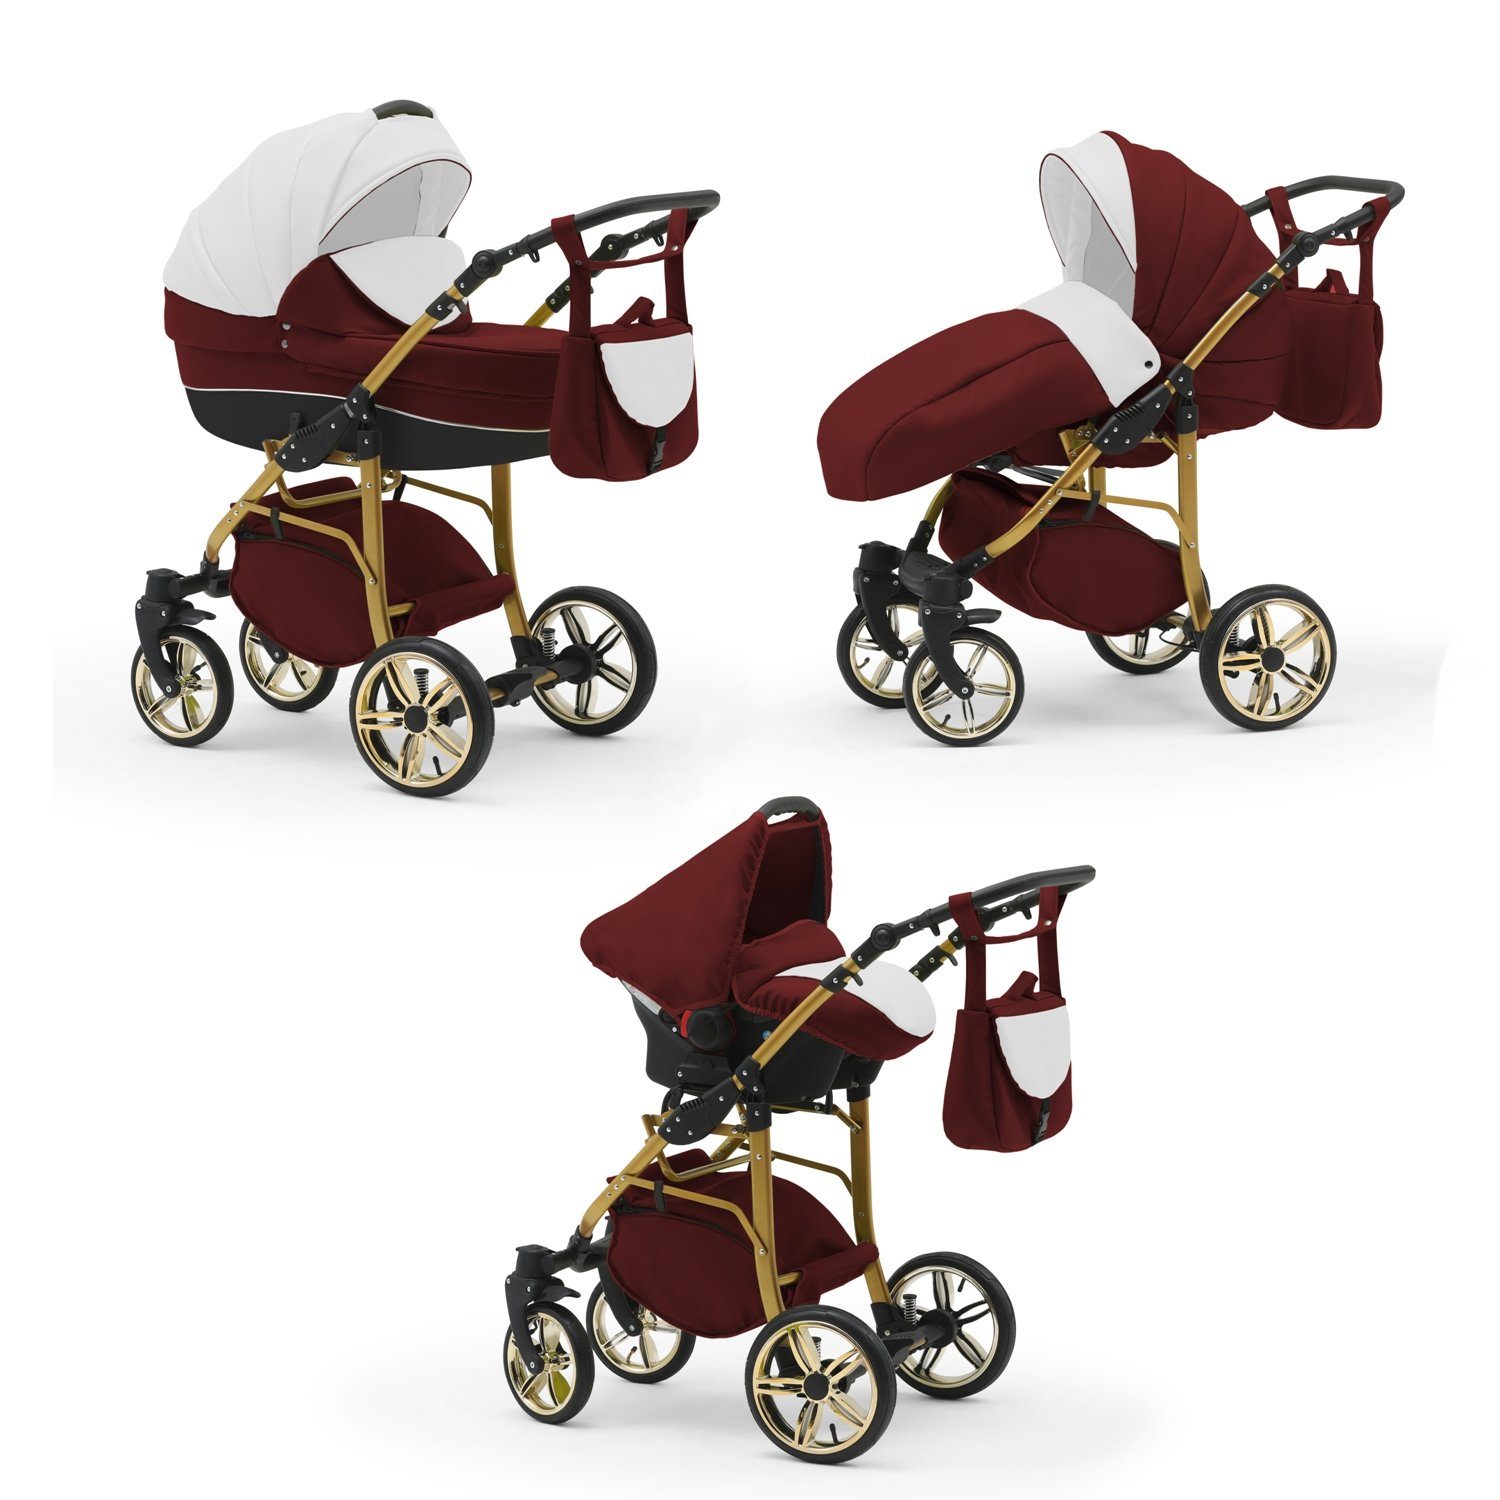 Farben - Kinderwagen-Set 46 1 Bordeaux-Weiß-Schwarz Cosmo Gold- babies-on-wheels Teile 3 in 16 Kombi-Kinderwagen in